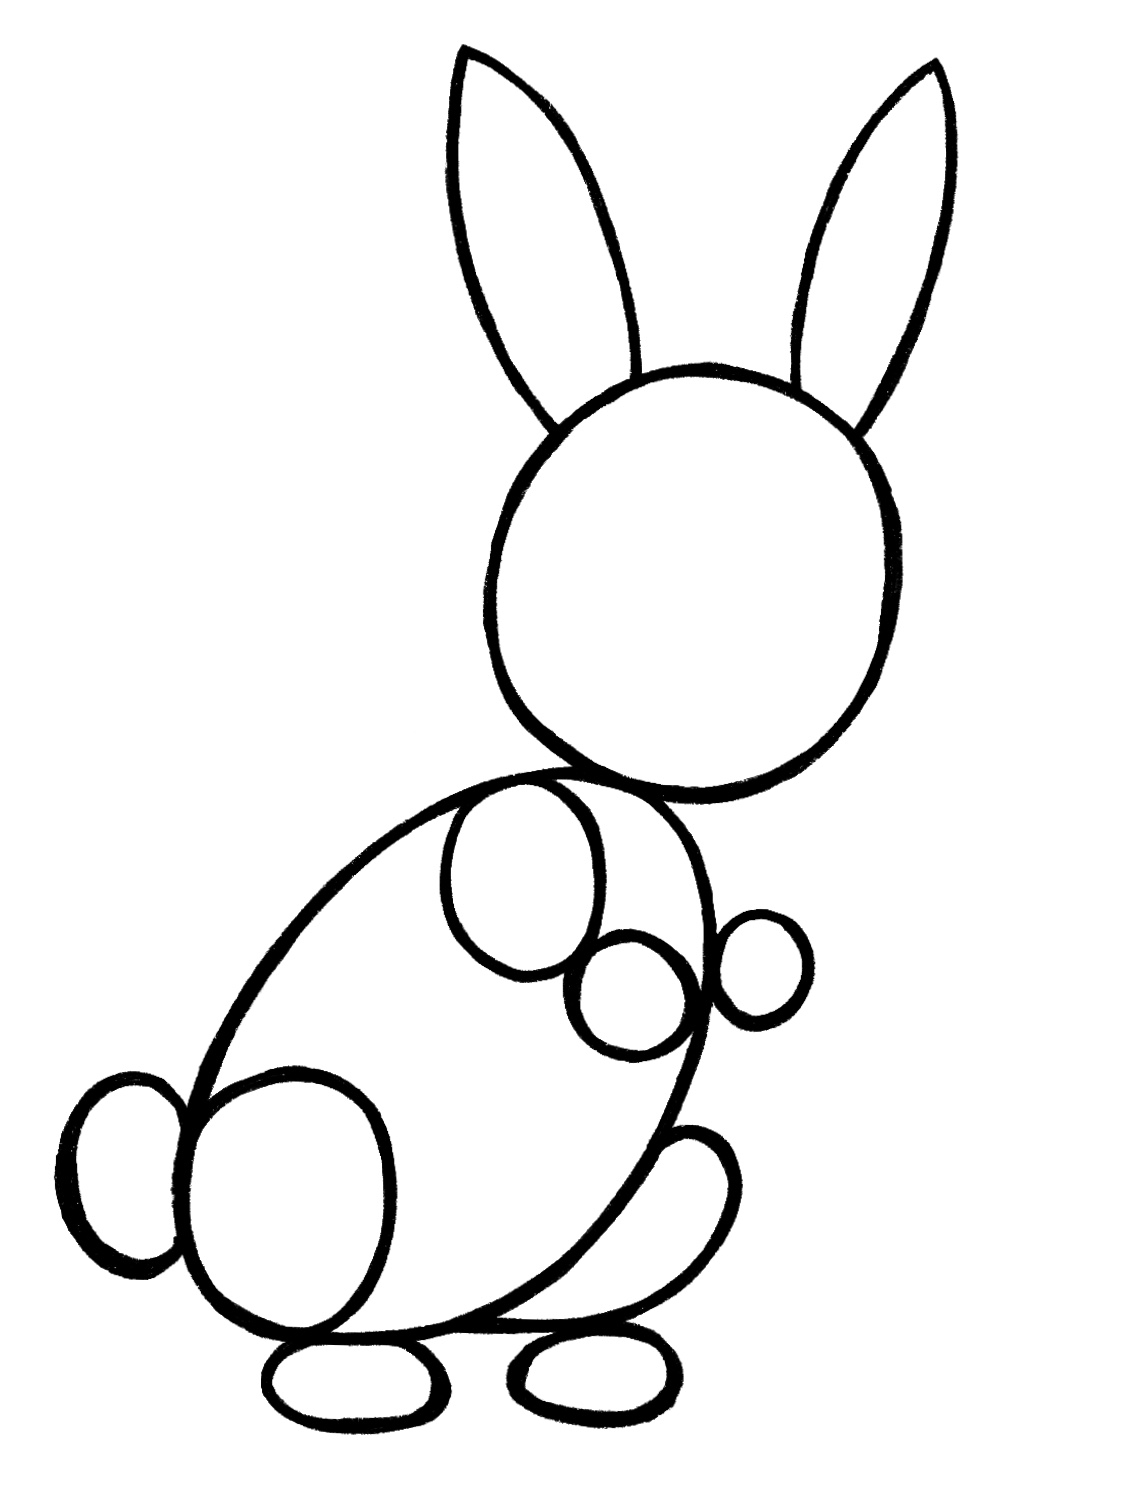 Rabbit Line Drawing Stock Illustrations  16633 Rabbit Line Drawing Stock  Illustrations Vectors  Clipart  Dreamstime